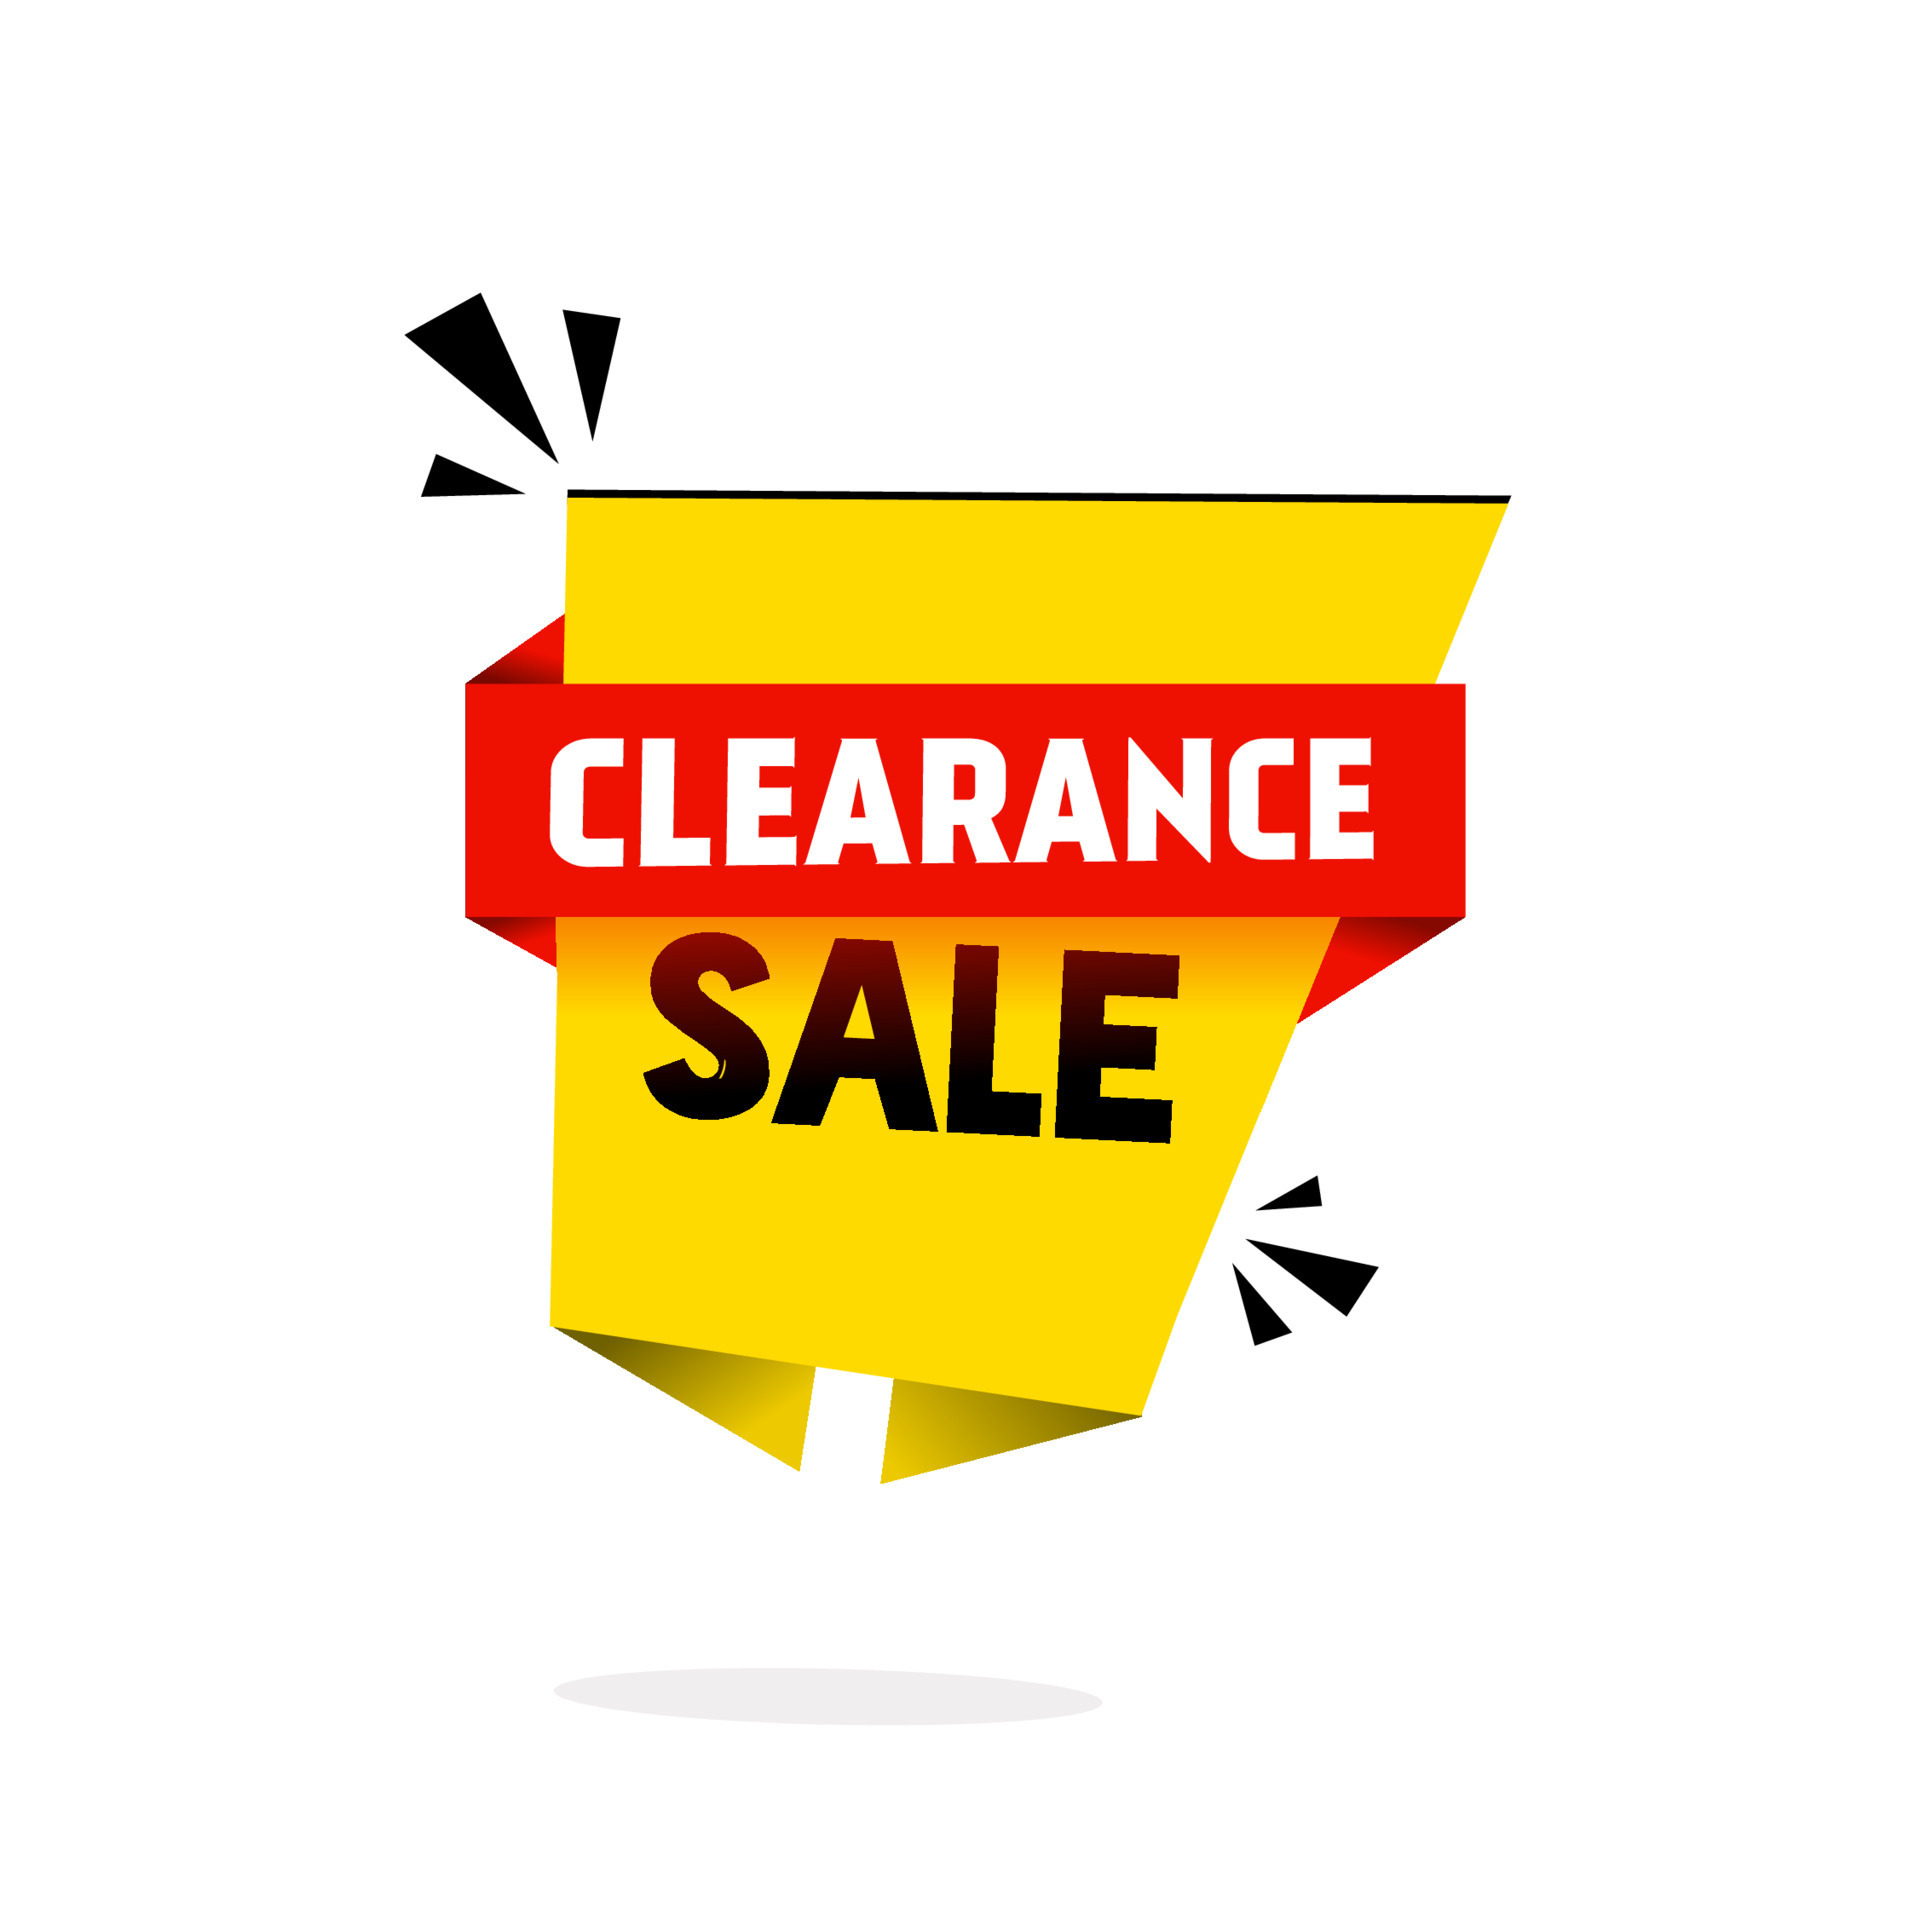 Clearance sale banner design template, vector illustration. Flat